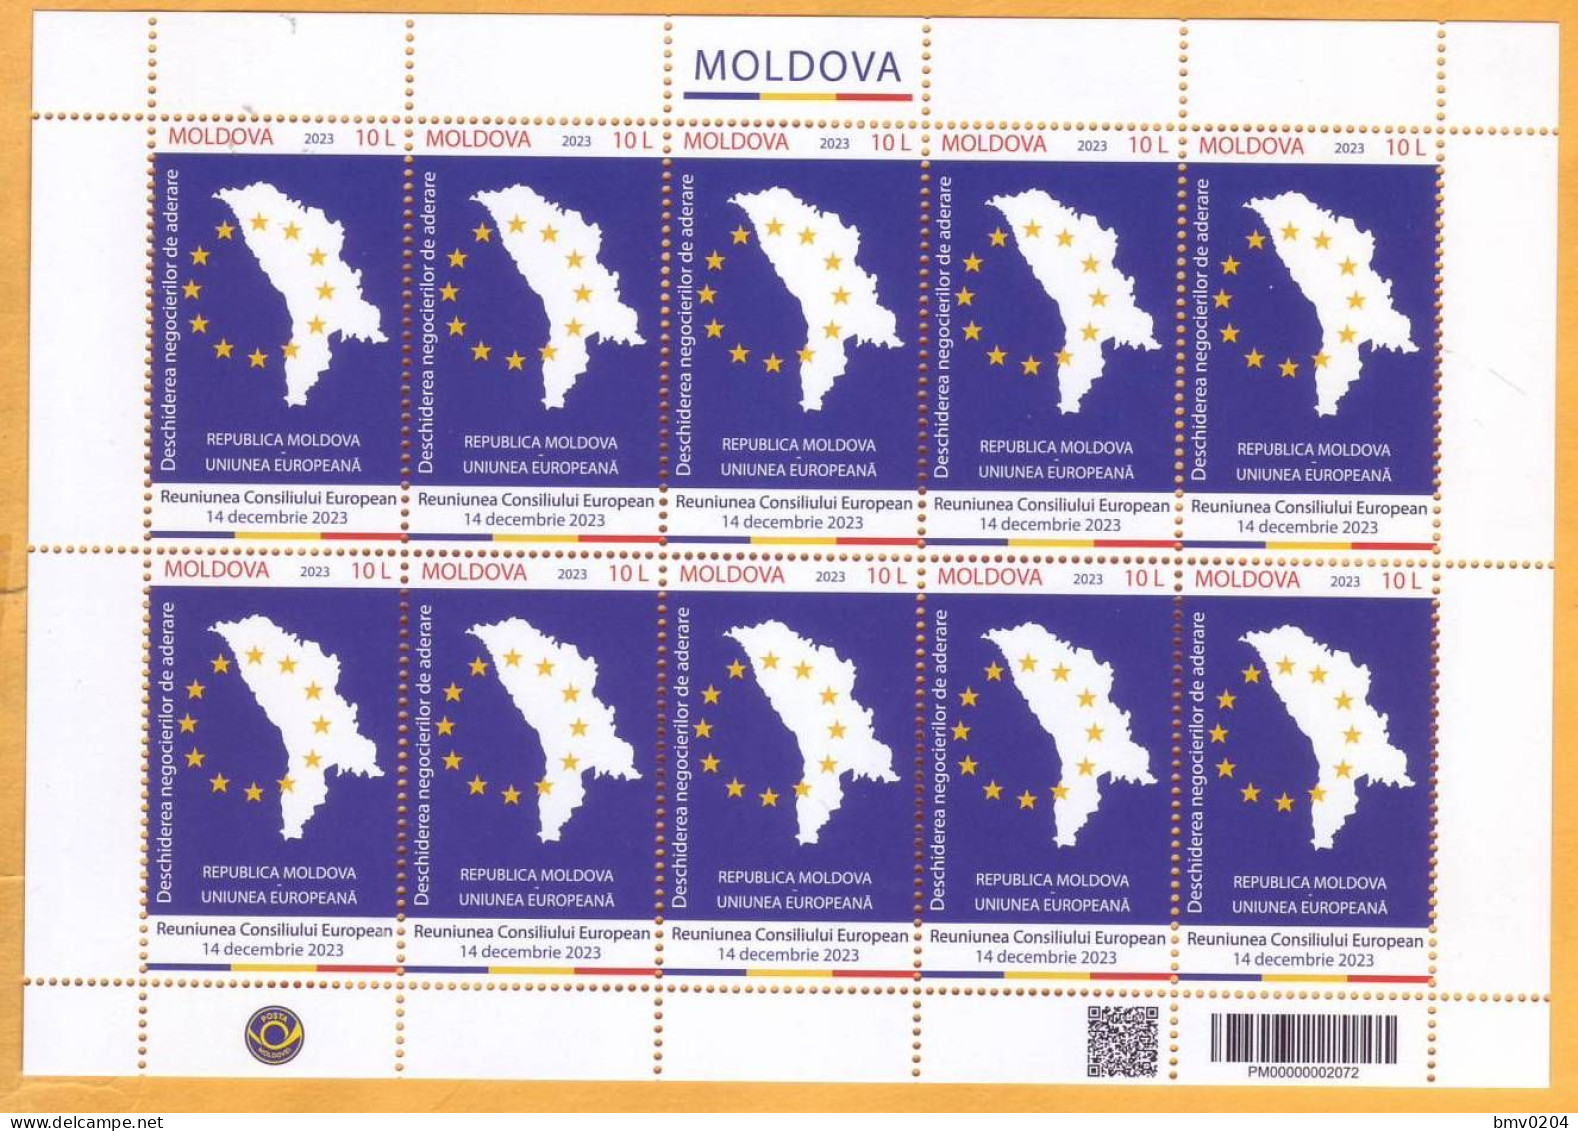 2023  Moldova  Sheet The Opening Of Accession Negotiations REPUBLIC OF MOLDOVA - EUROPEAN UNION  Mint - Europäischer Gedanke